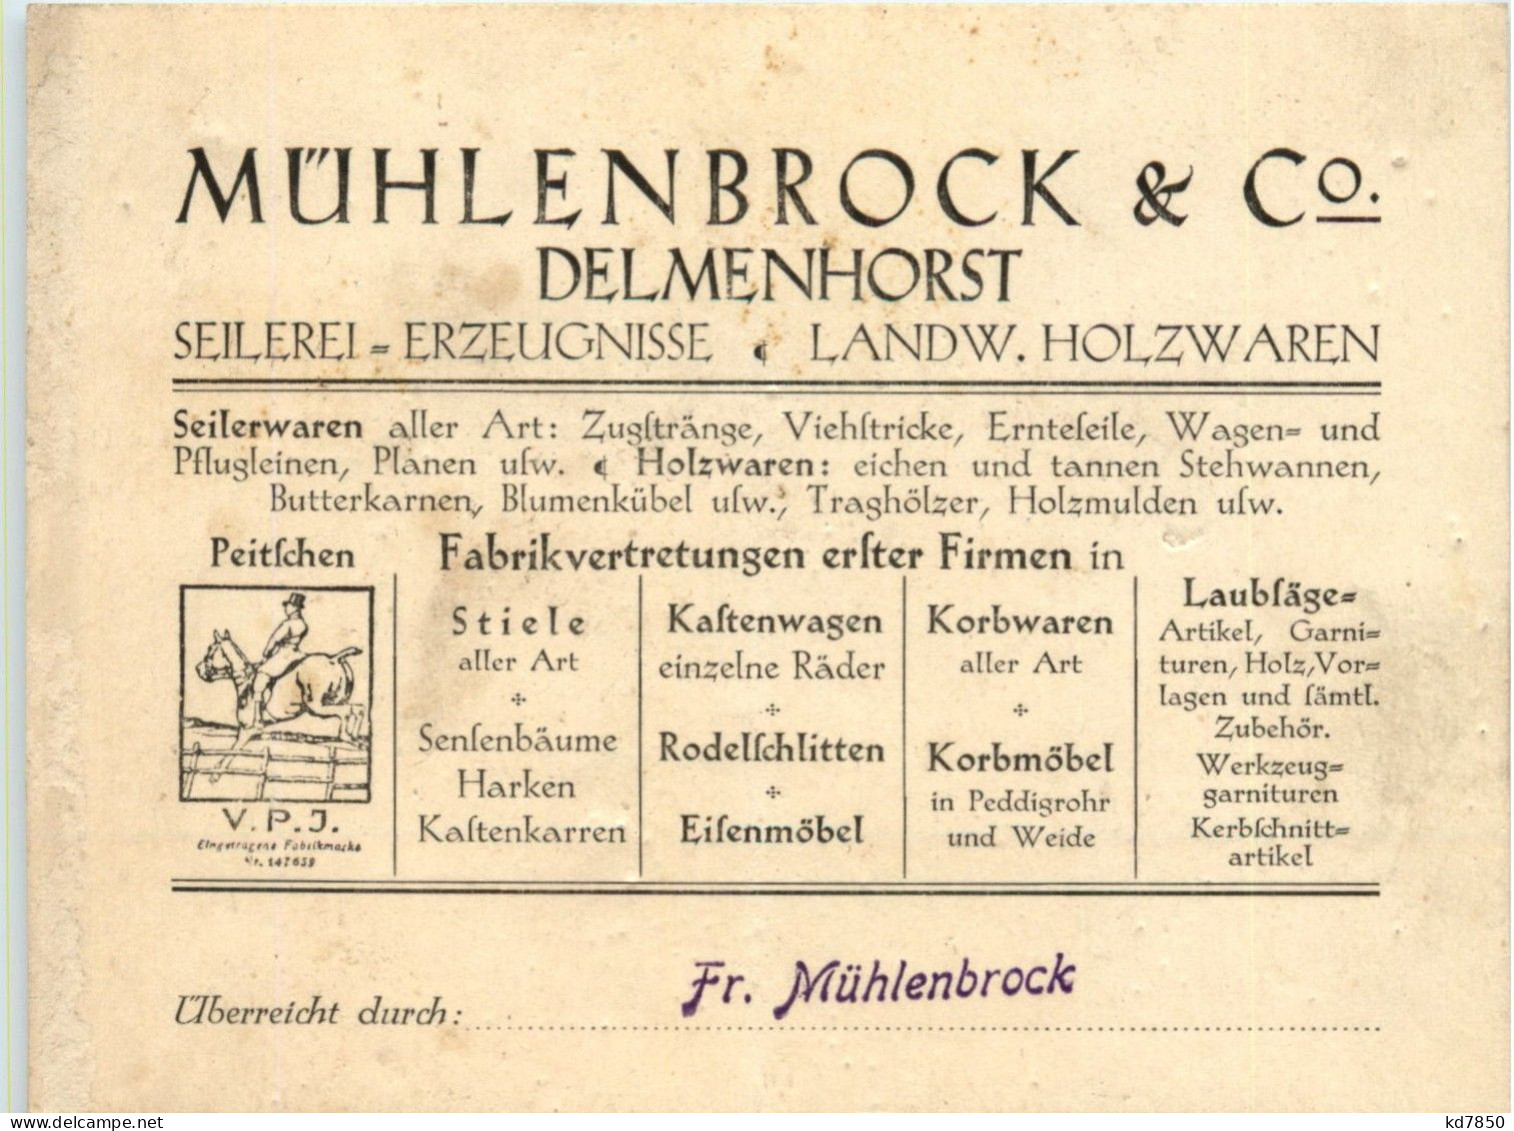 Delmenhorst - Mühlenbrock & Co. - Delmenhorst